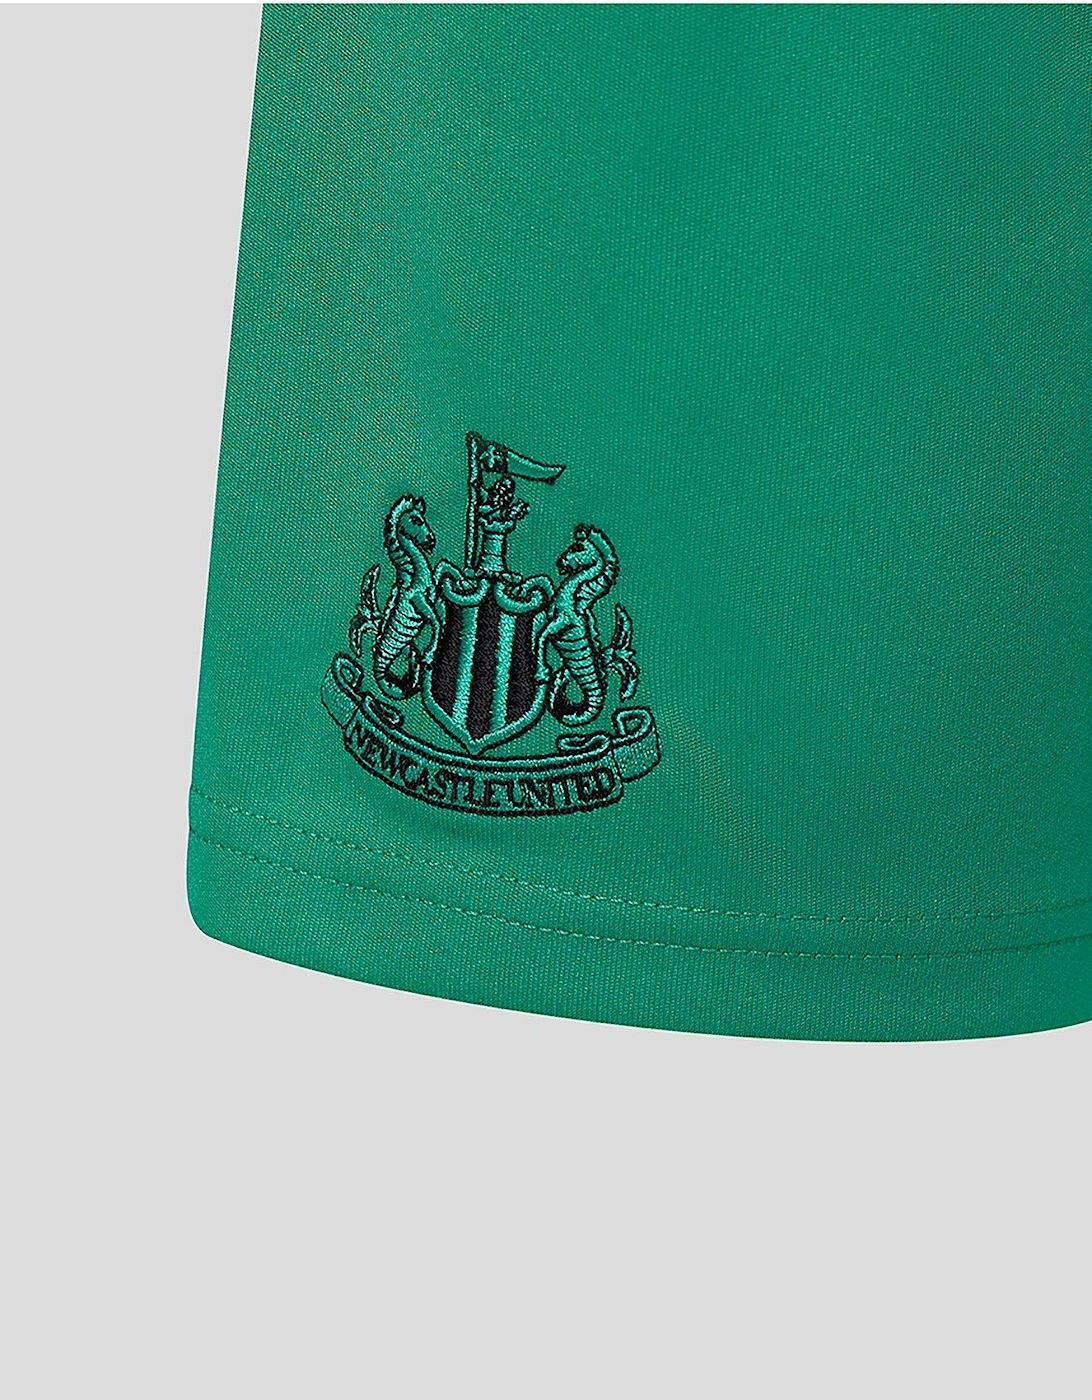 Newcastle Junior 23/24 Away Stadium Shorts - Green